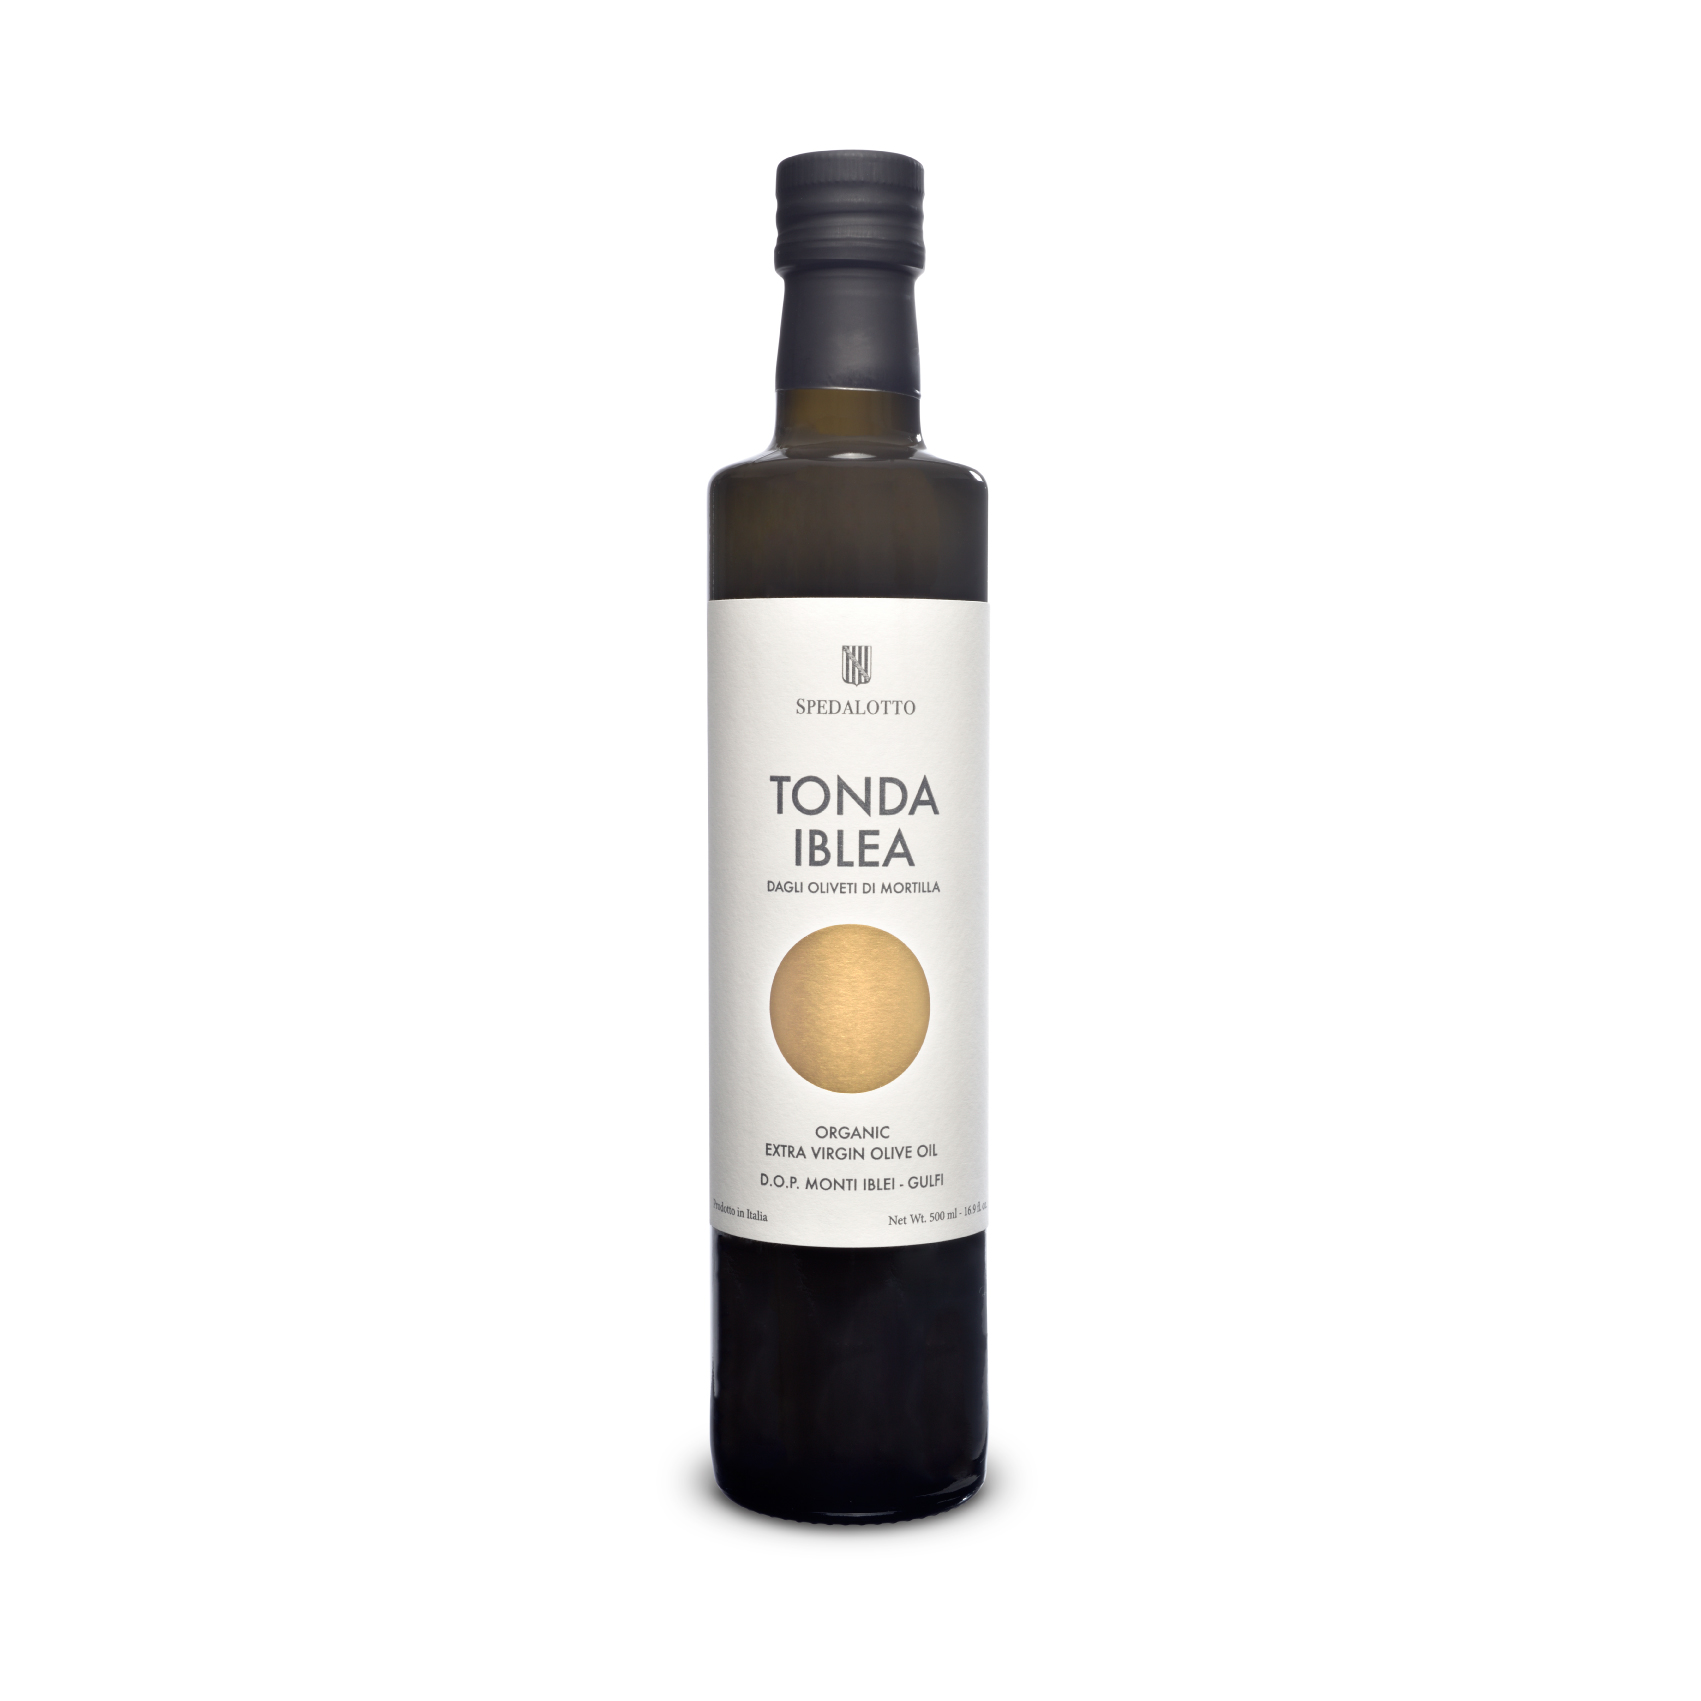 Spedalotto Tonda Iblea ; Organic Extra Virgin Olive Oil, premium product, estate produced and bottled